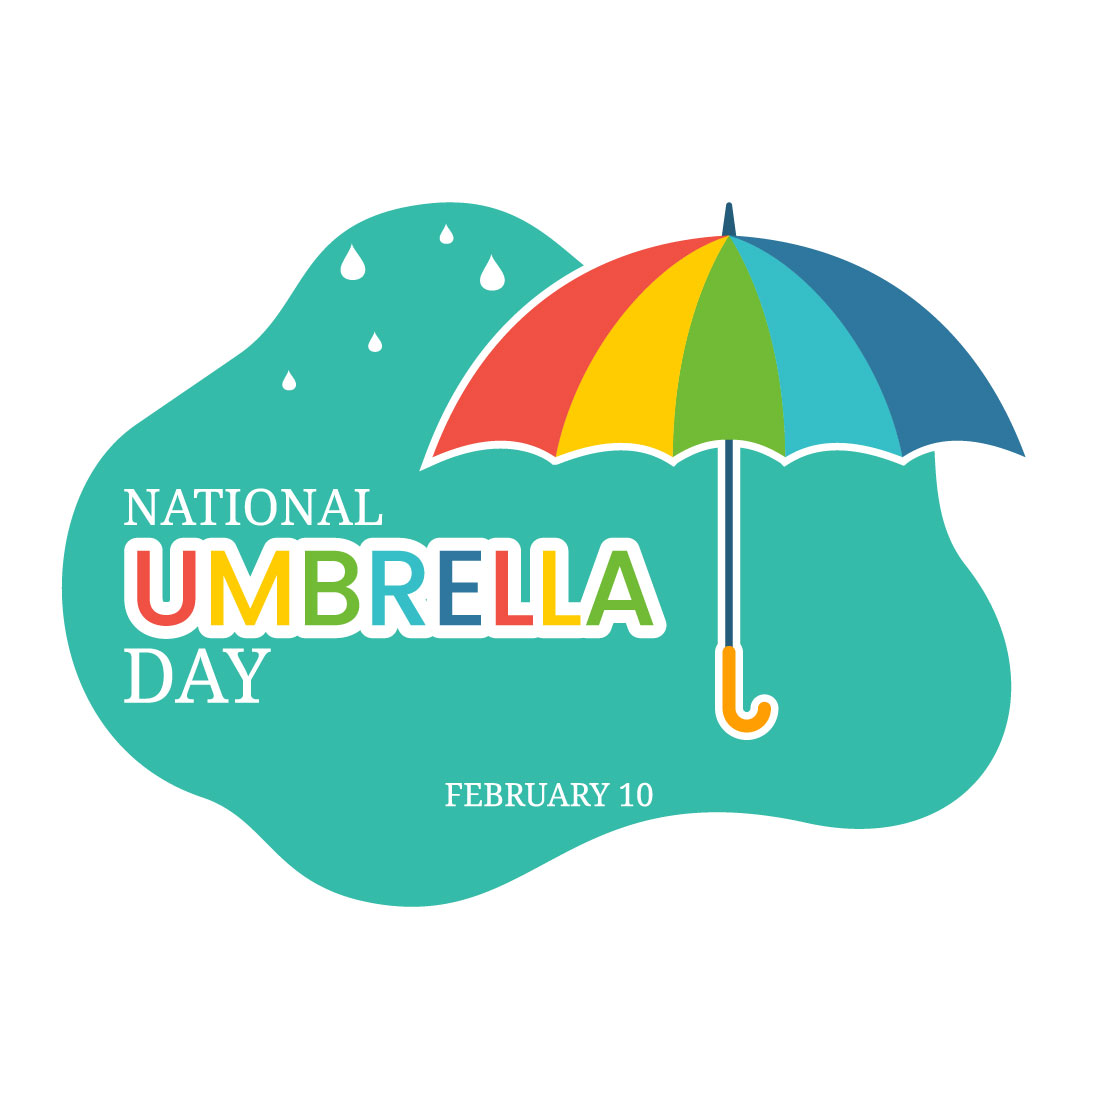 National Umbrella Day Illustration cover image.